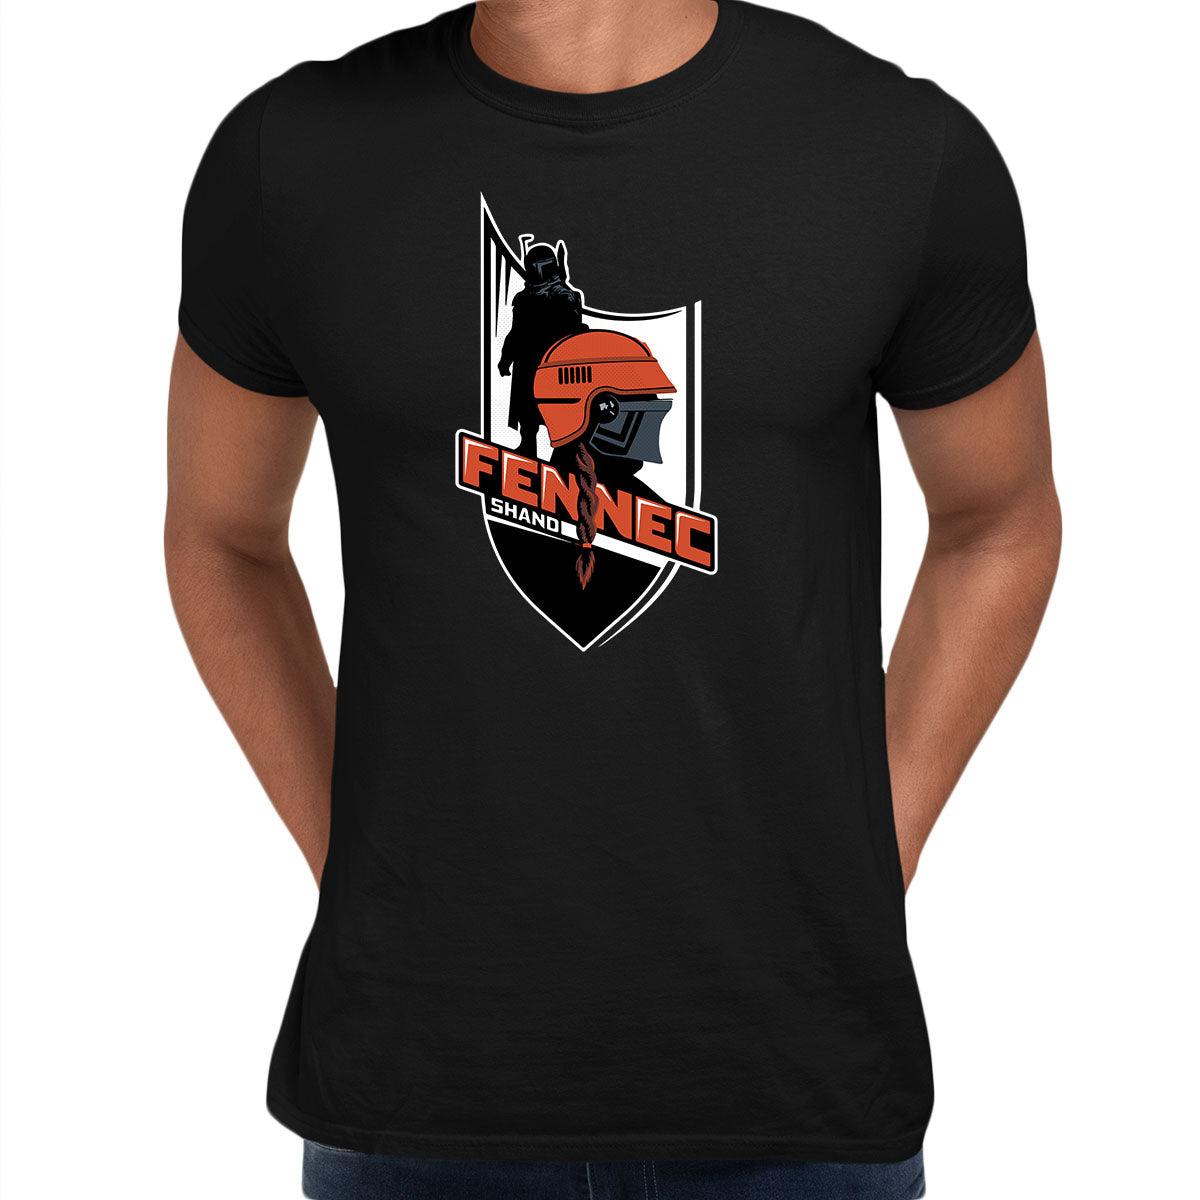 Fennec Shand  Boba Fett Star Wars Universe Adult Unisex T-Shirt - Kuzi Tees